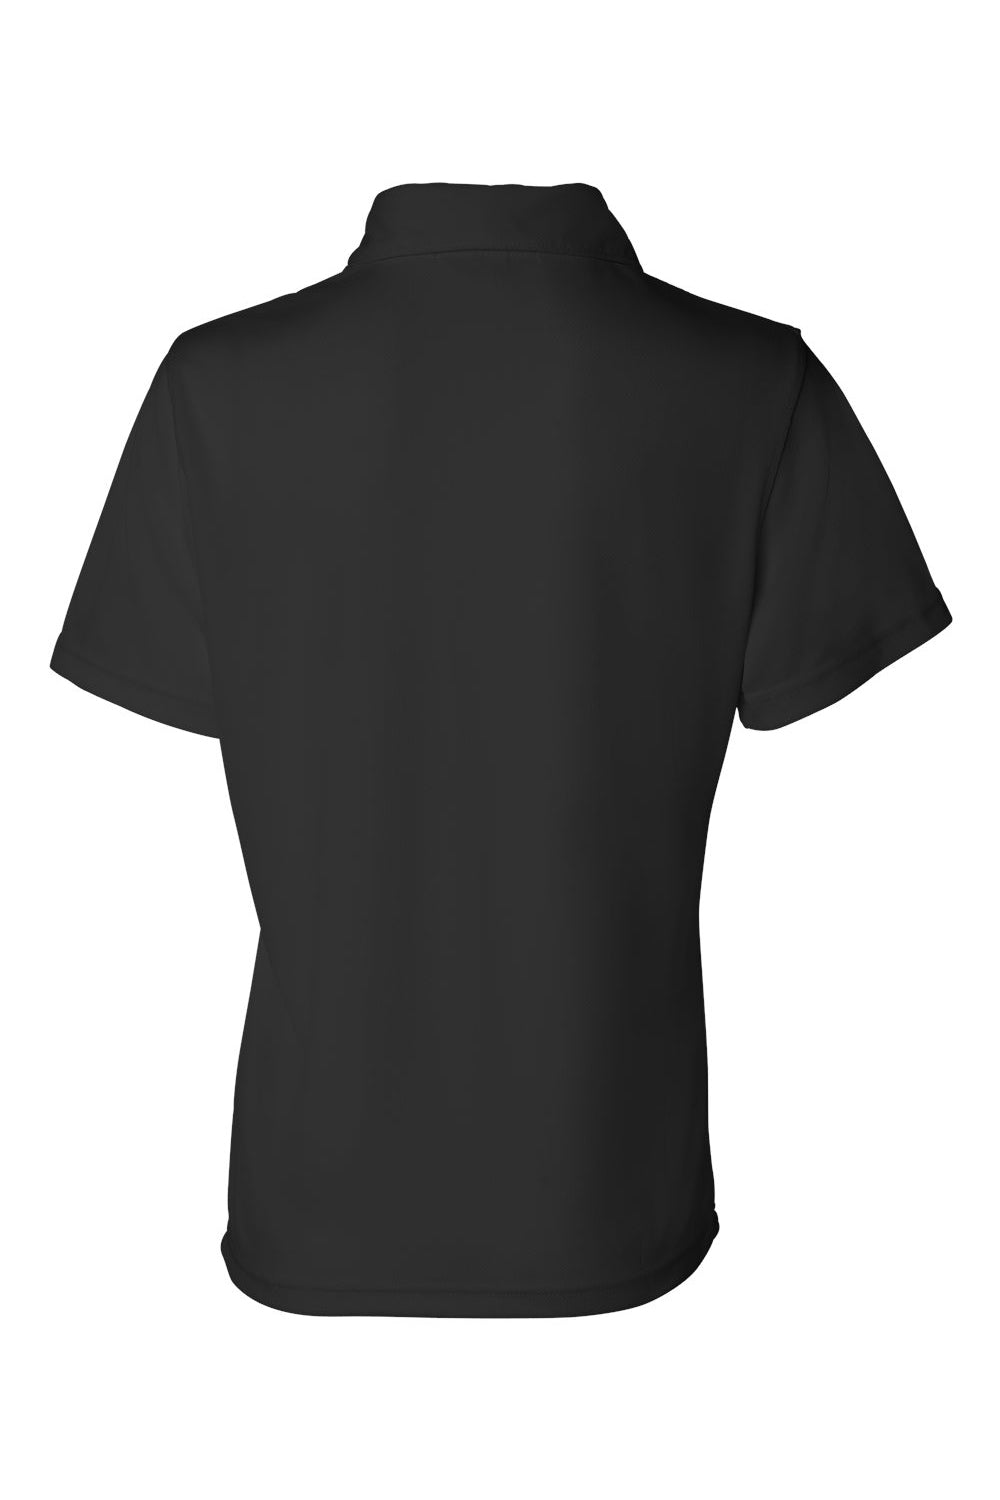 Sierra Pacific 5469 Womens Moisture Wicking Mesh Short Sleeve Polo Shirt Black Flat Back